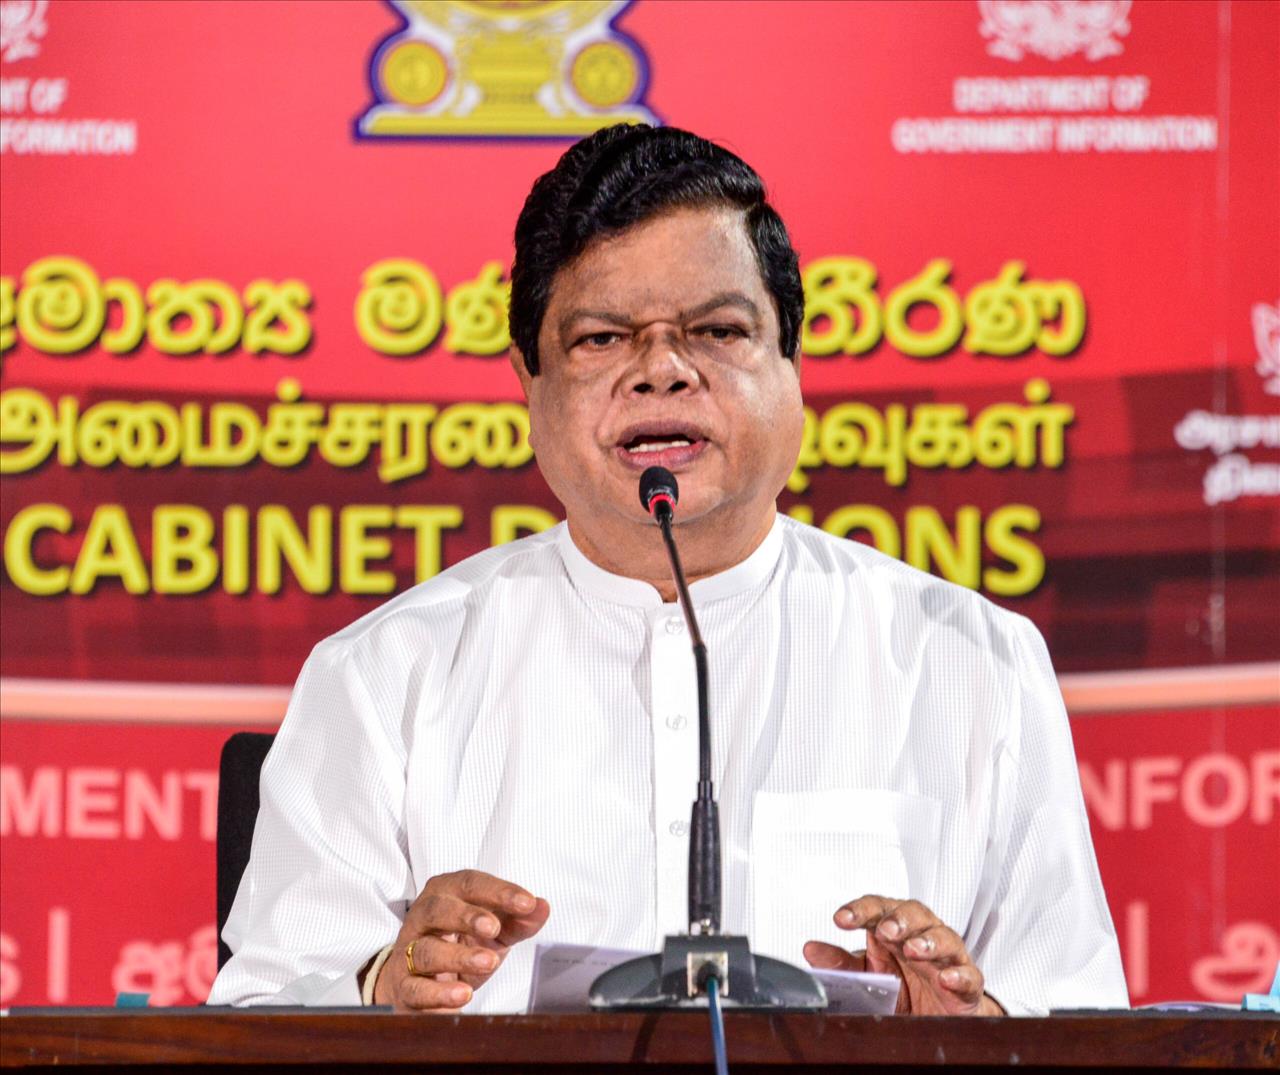 Media Accused Of Damaging Sri Lanka's Image